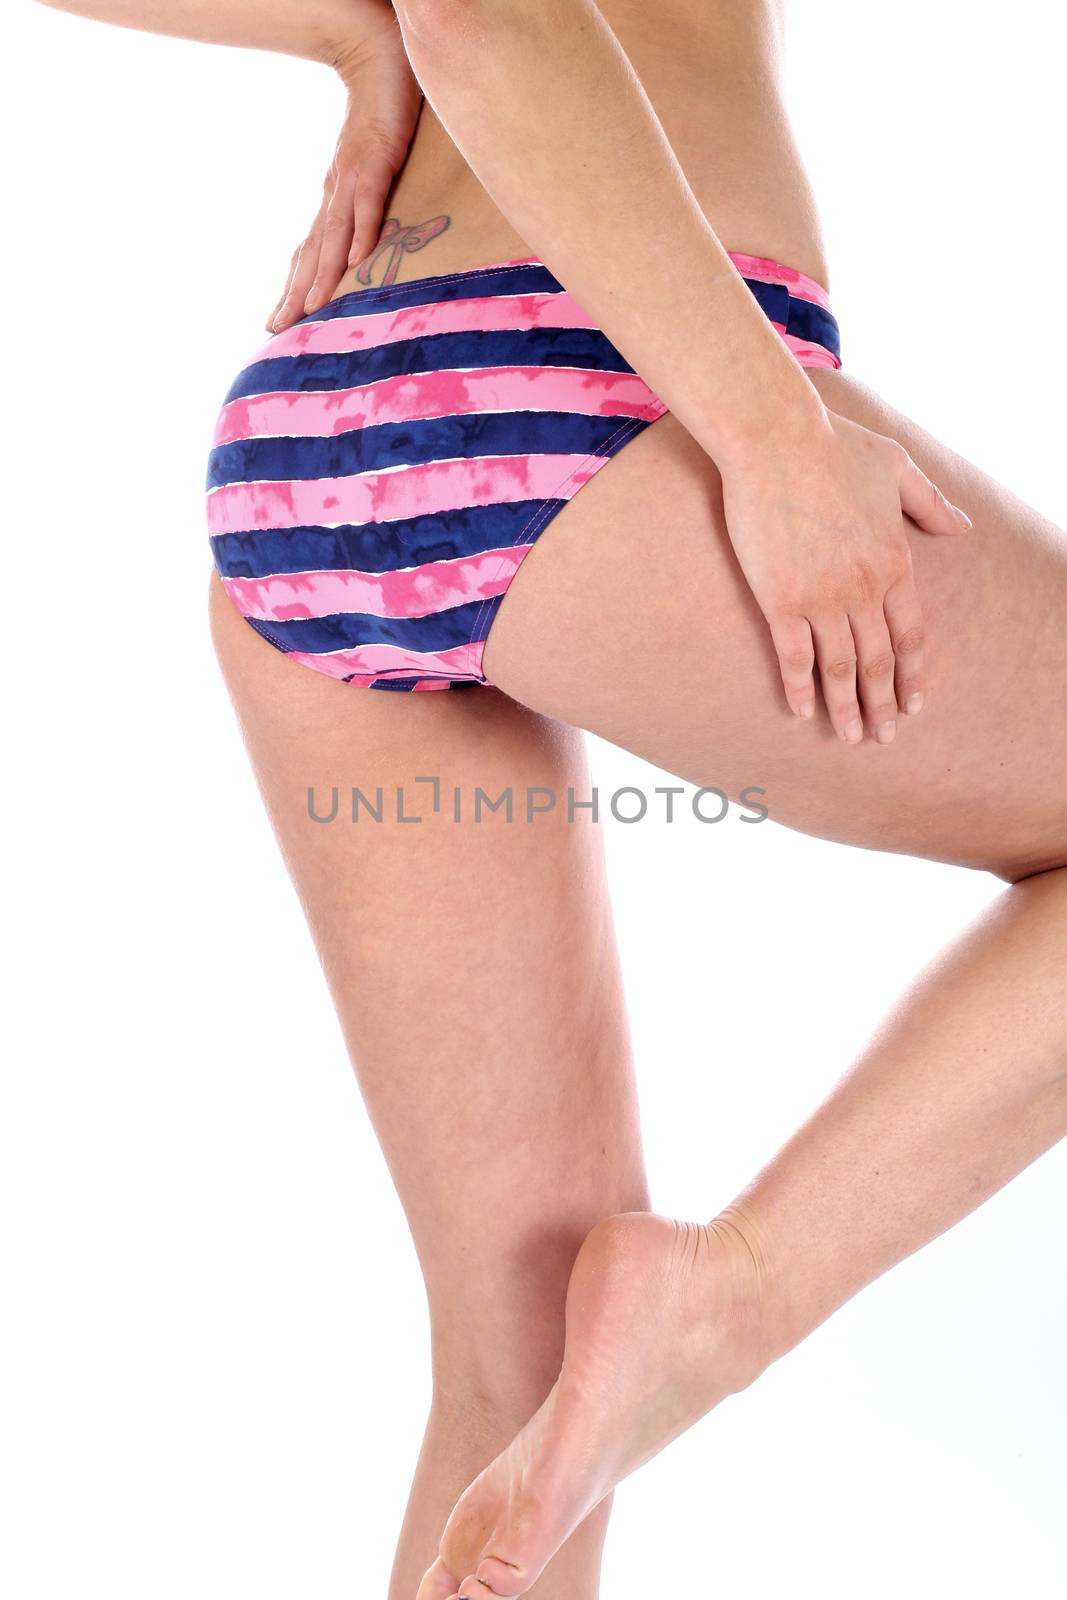 Model Released. Sexy Young Woman Wearing Bikini Bottoms by Whiteboxmedia